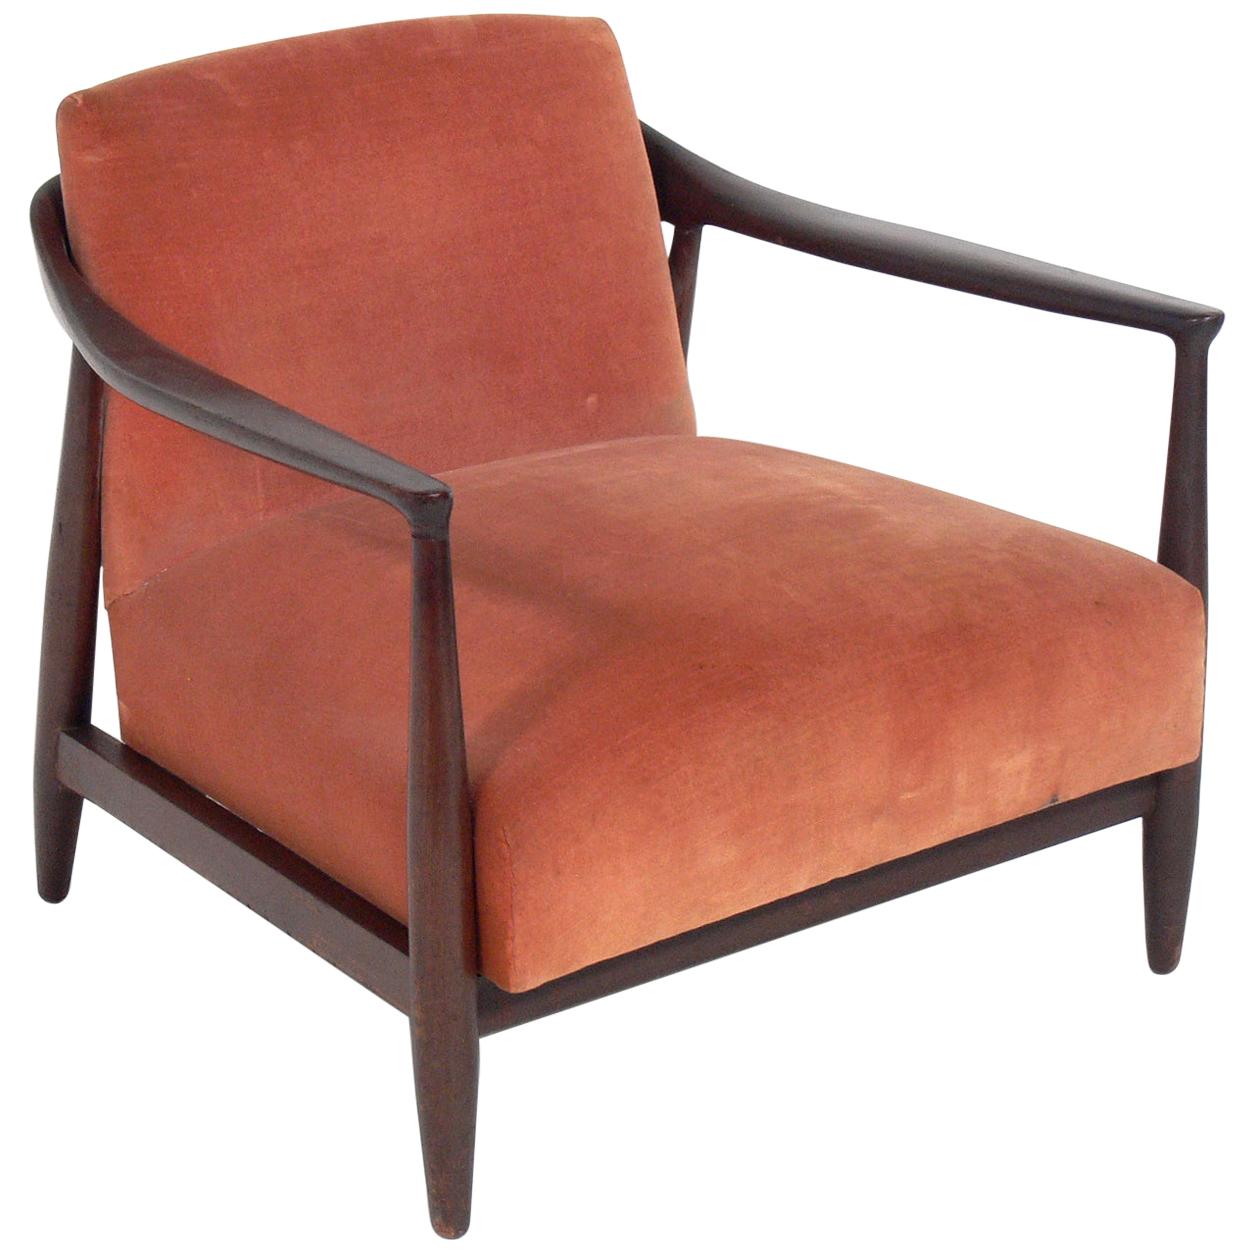 Low Slung Danish Modern Lounge Chair by Ib Kofod-Larsen